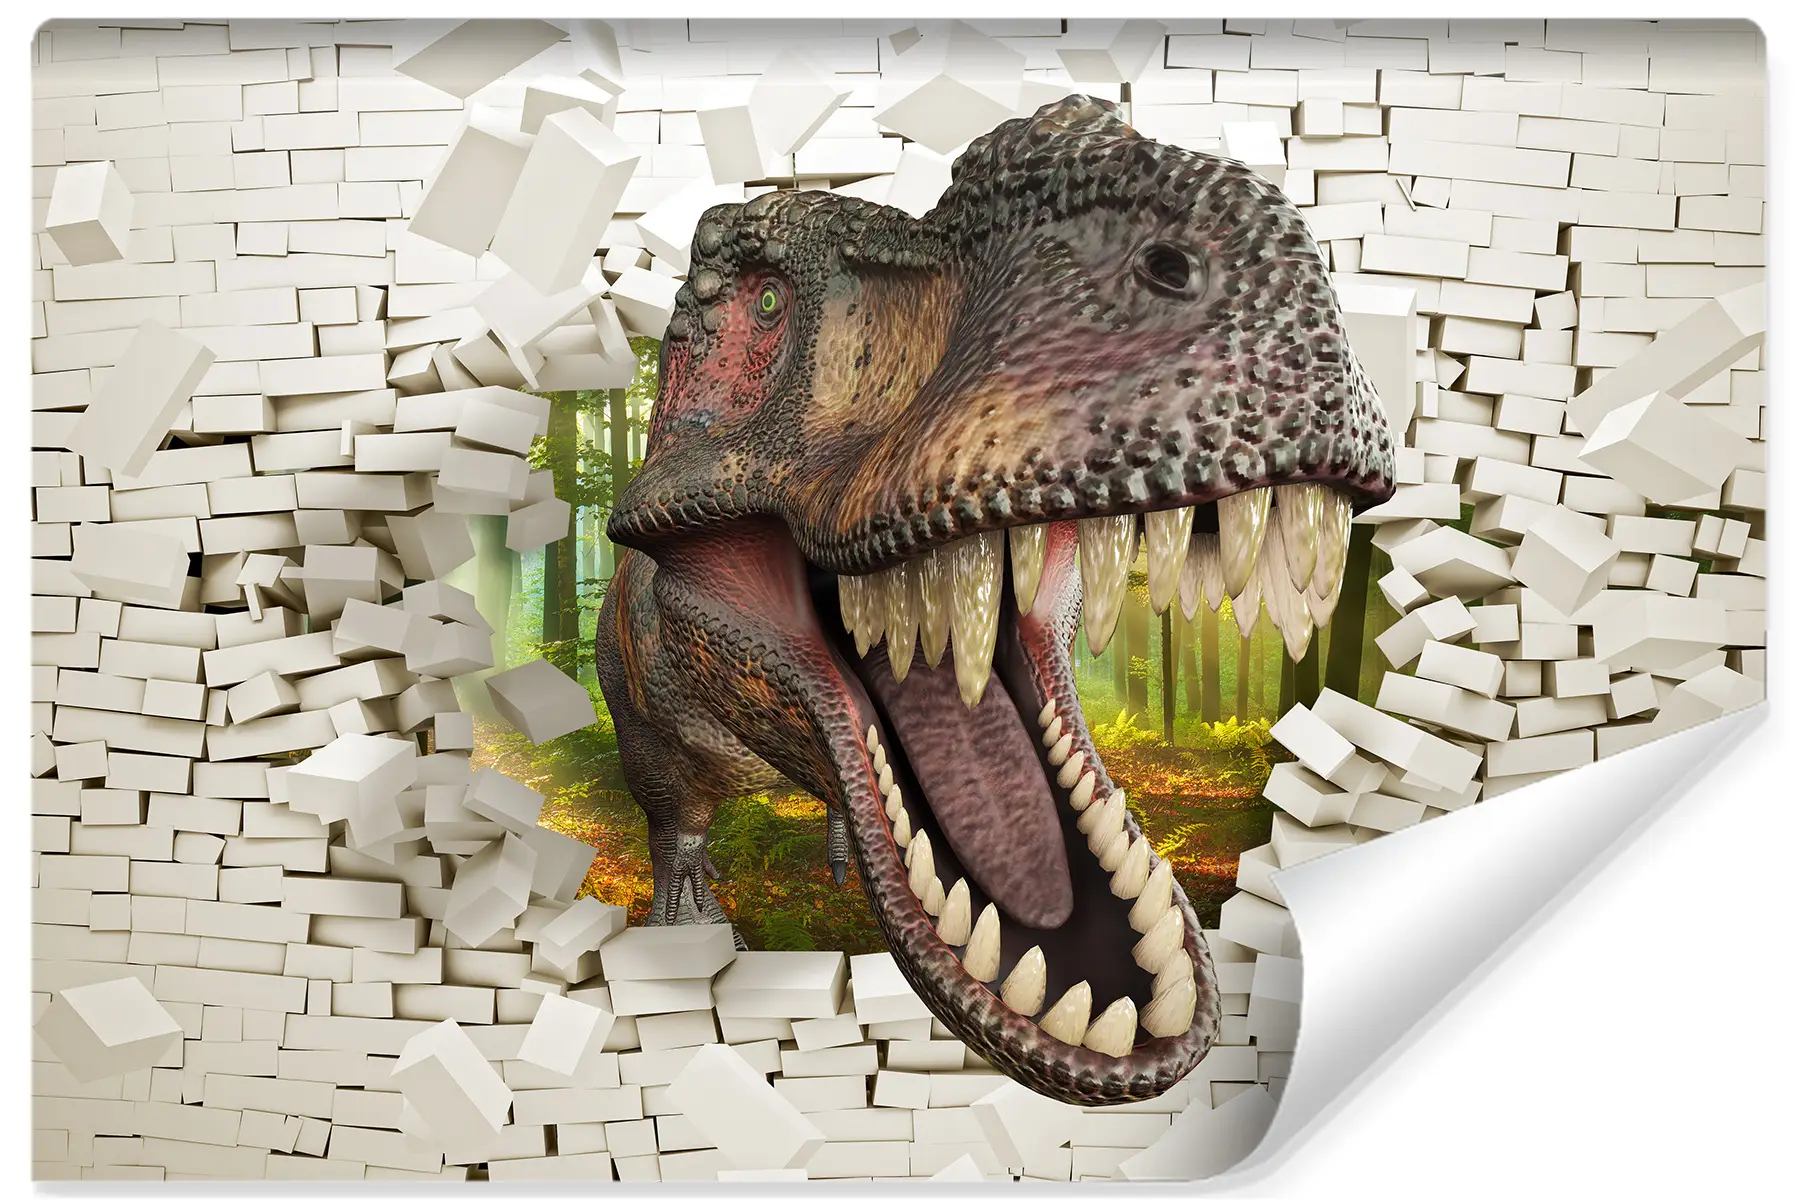 Fototapete Dinosaurier Wald 3D Ziegel